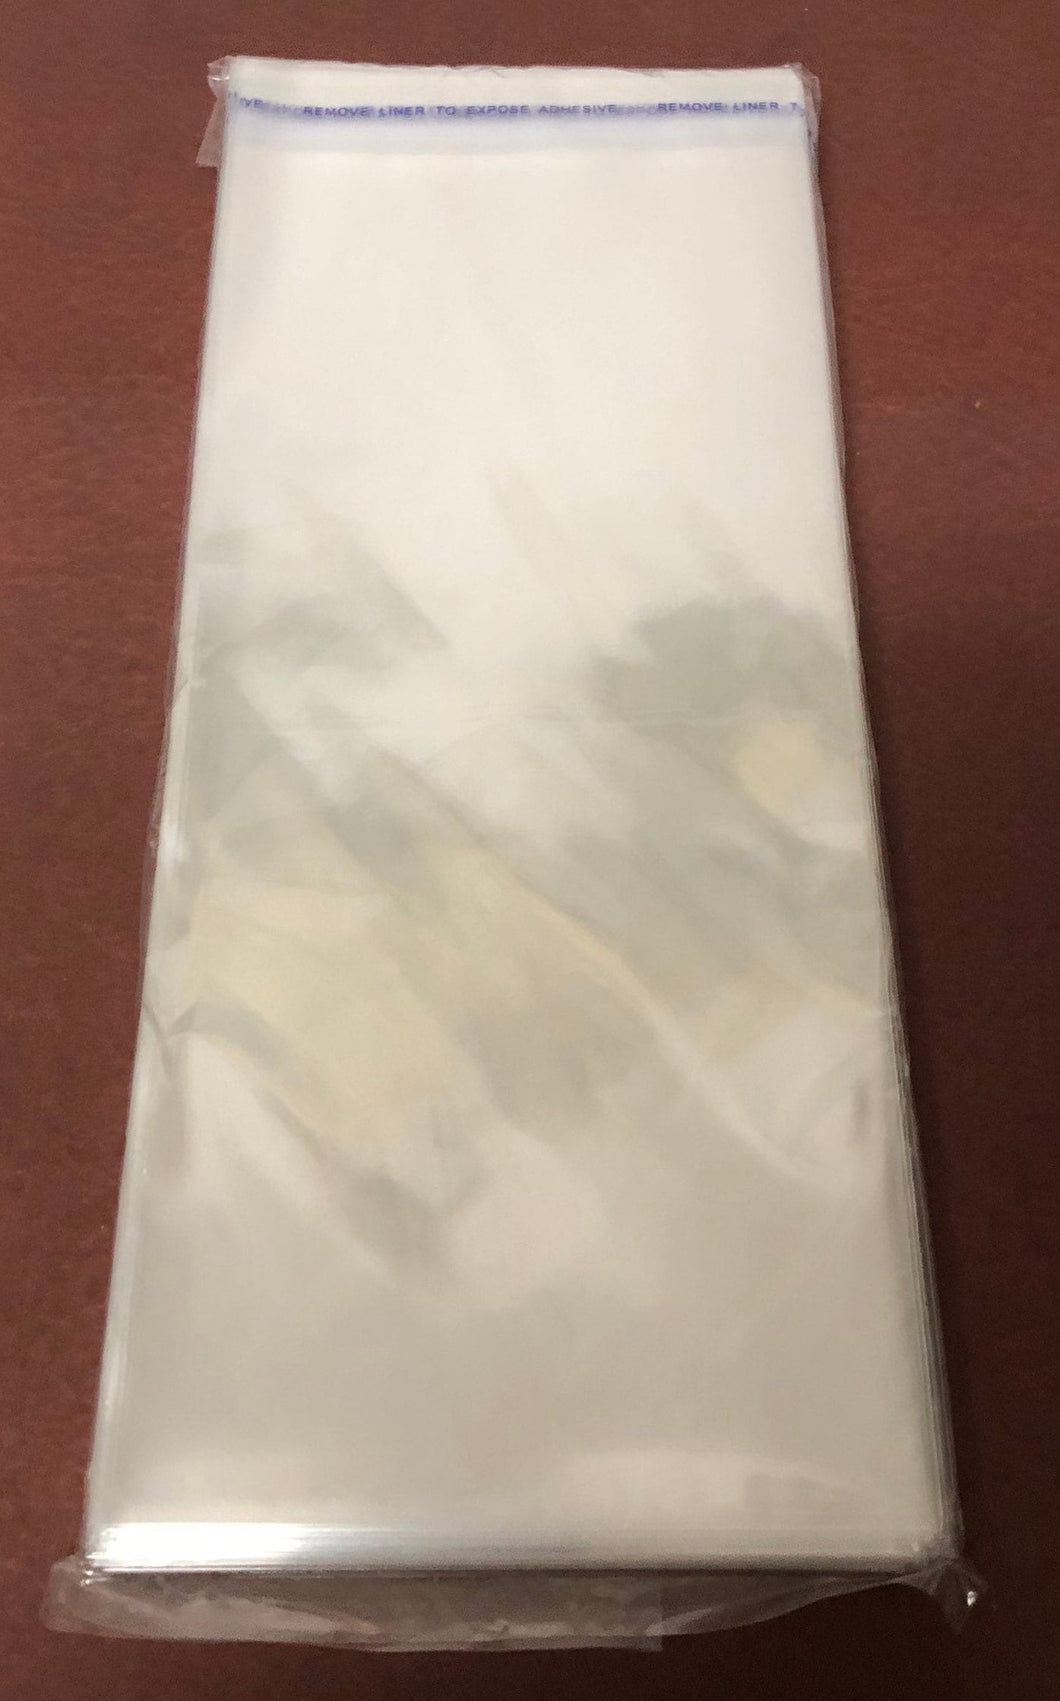 Crystal Clear Resealable Polypropylene Bags - 4 1⁄4